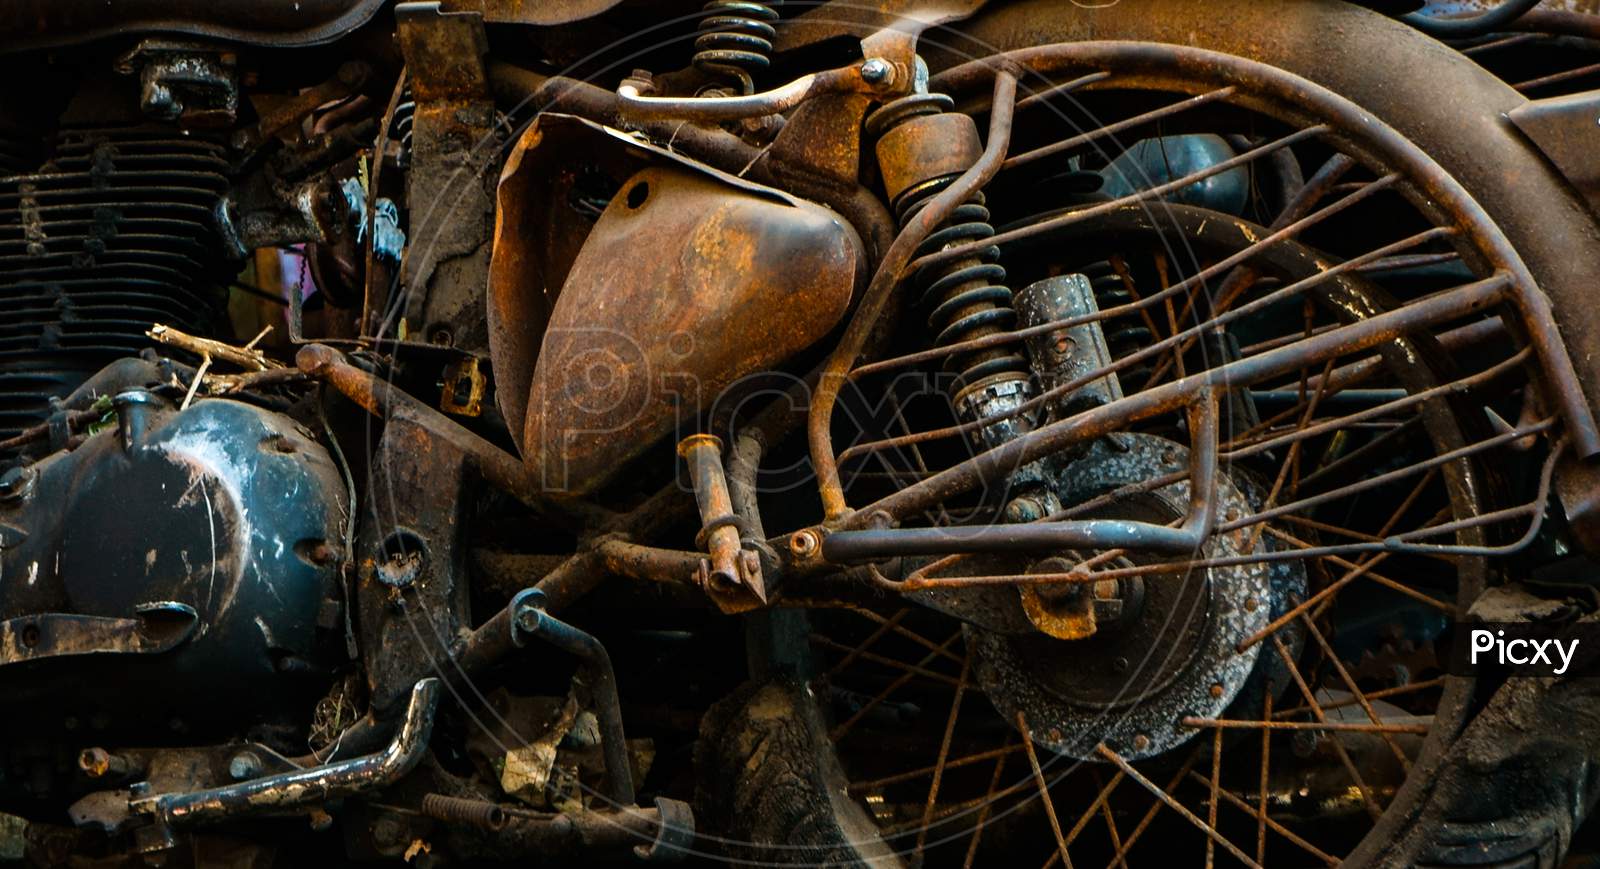 Image of rusted royal enfield bike-GI665549-Picxy